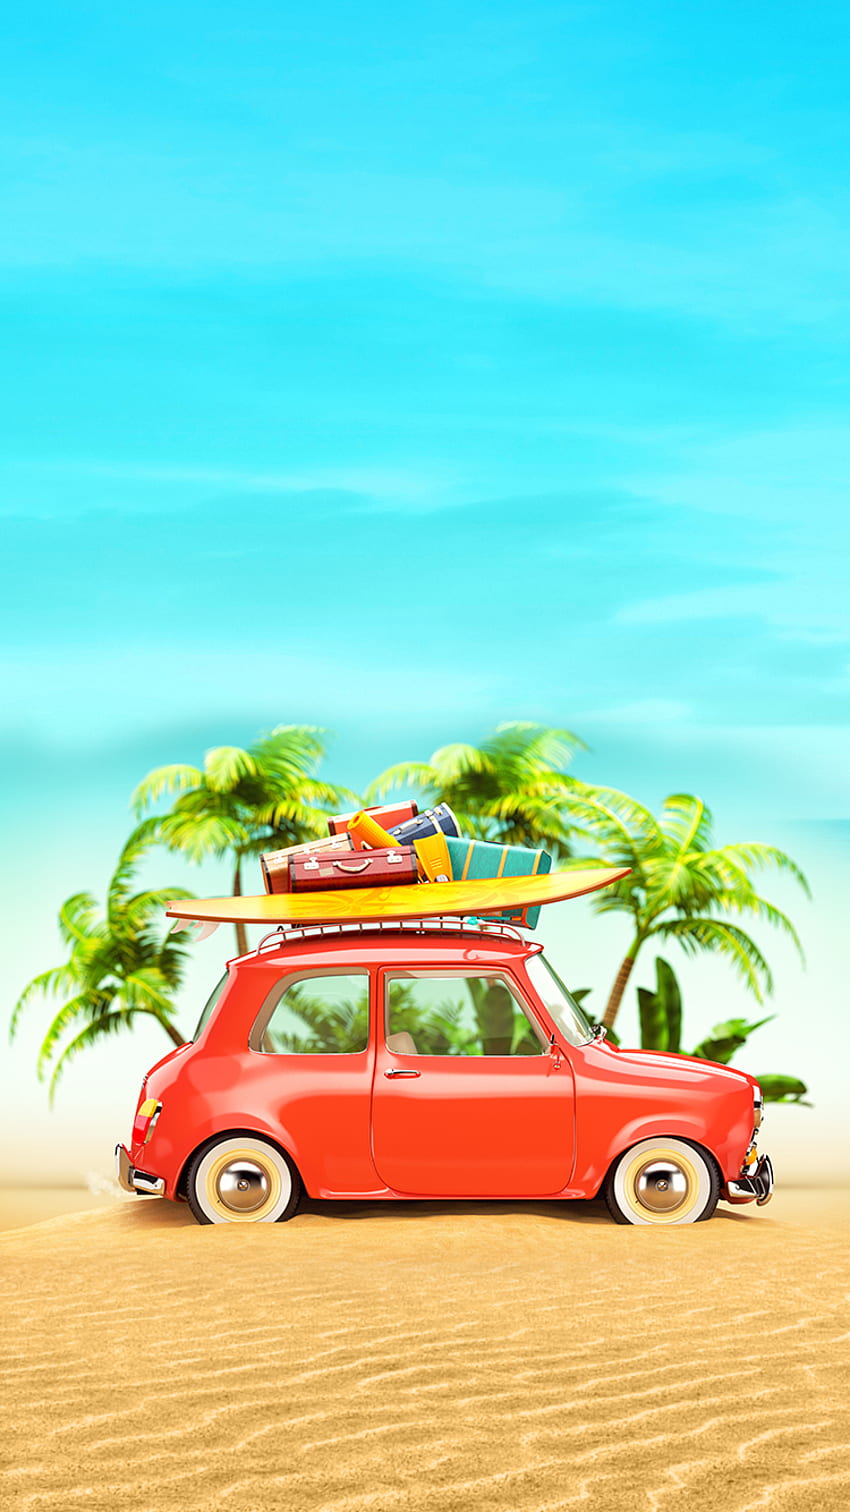 Ƒ↑TAP DAN DAPATKAN APLIKASINYA! Art Creative Sky Car Beach Travel Vacation Palms Sun Holiday iPhone 6 . Ilustrasi perjalanan, mobil Retro, perjalanan musim panas wallpaper ponsel HD